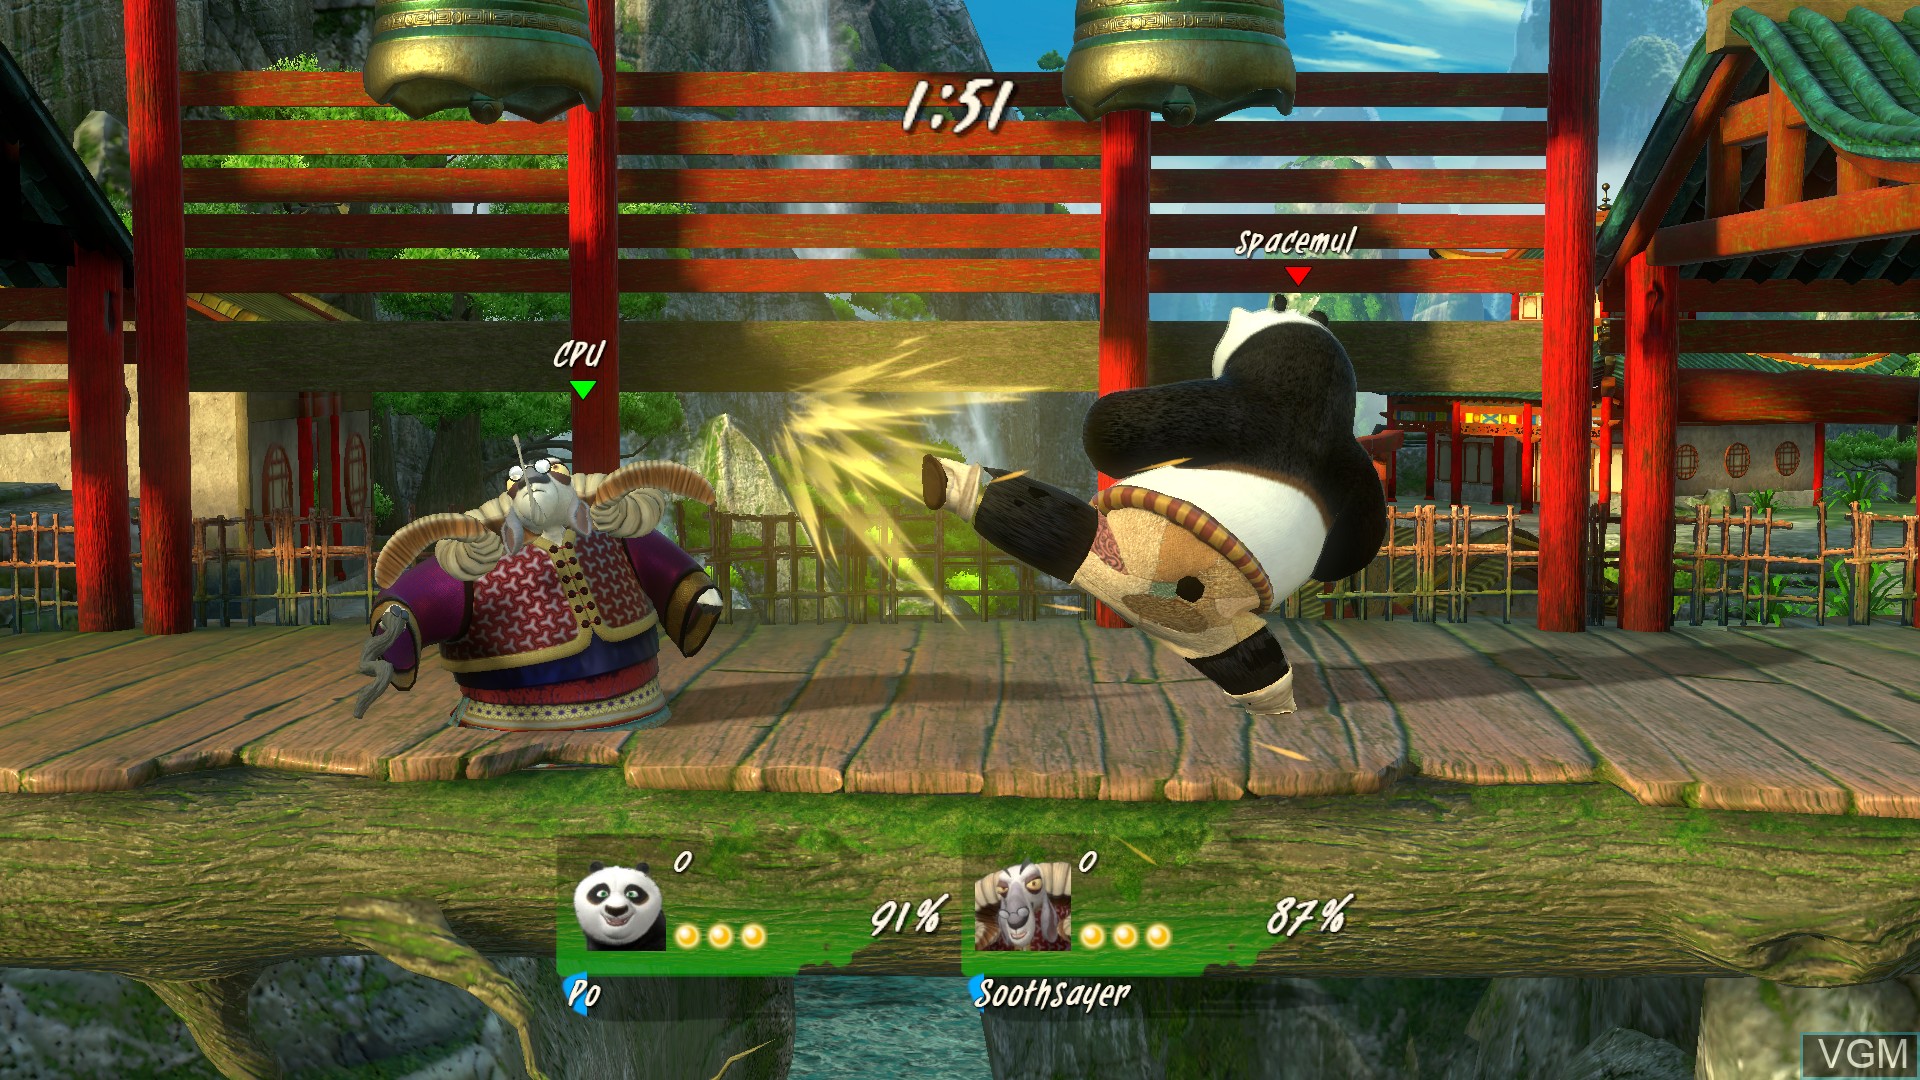 Kung Fu Panda - Showdown of Legendary Legends